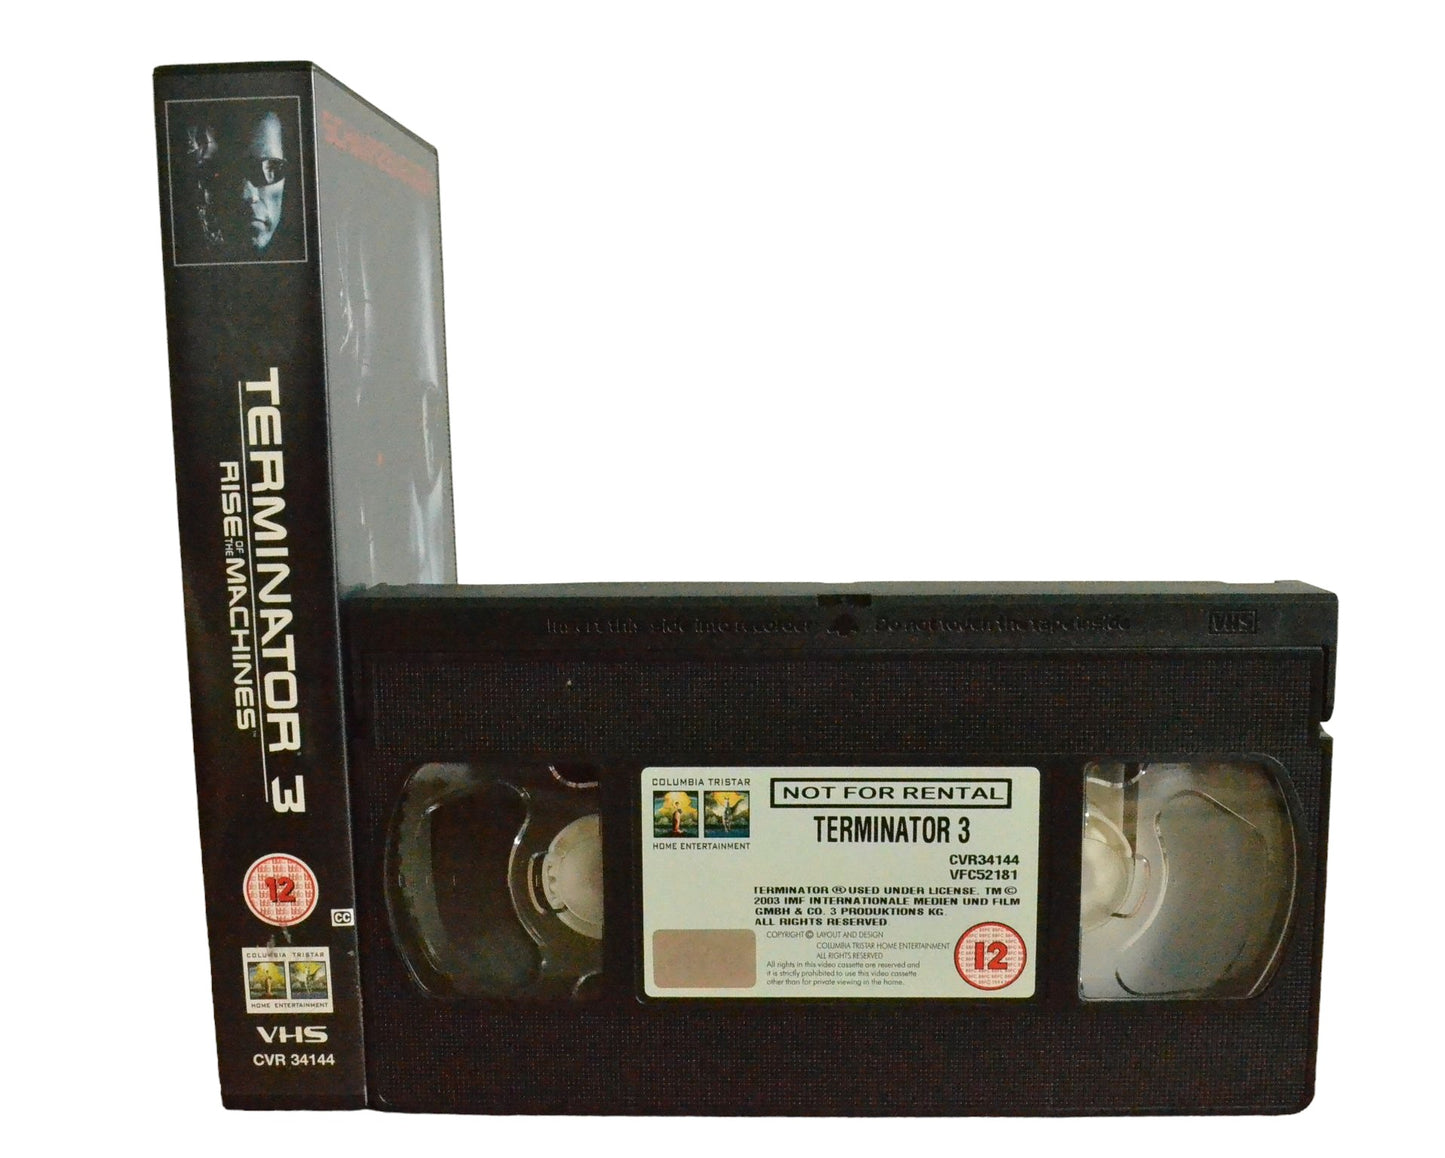 Terminator 3 (Rise Of The Machines) - Arnold Schwarzenegger - Home Entertainment - CVR34144 - Sci-Fi - Pal - VHS-